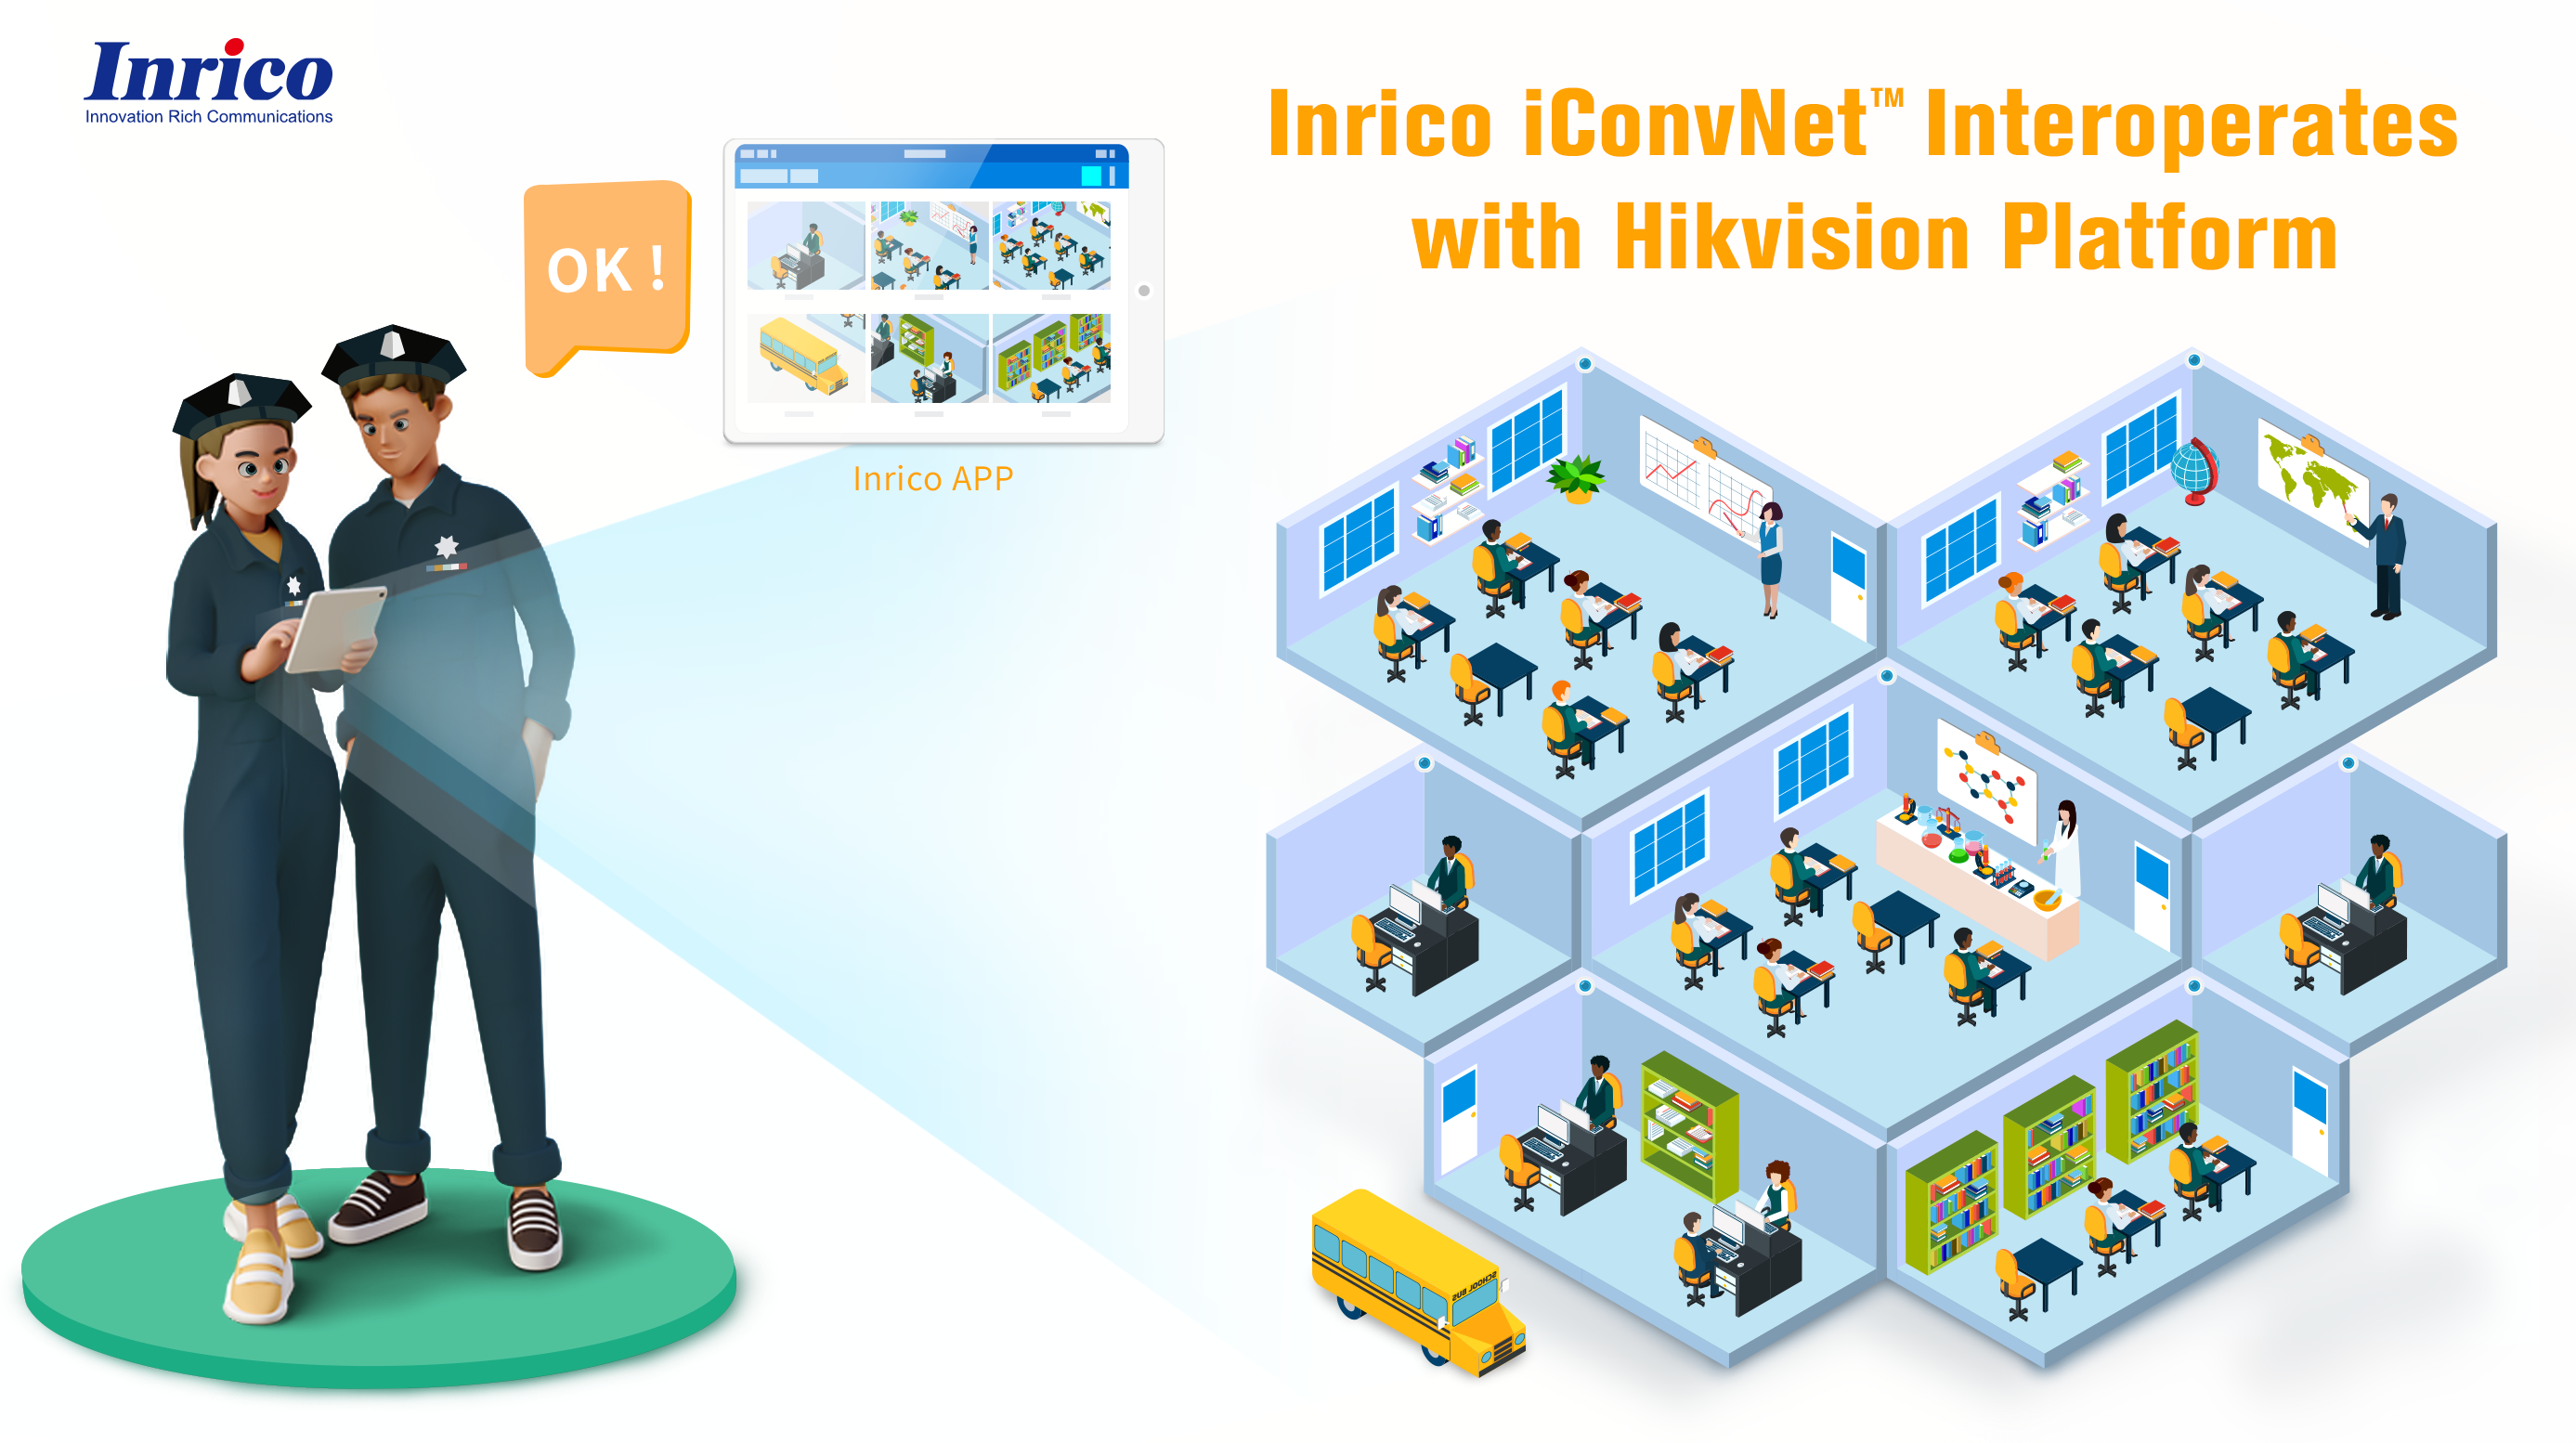 Inrico iConvNet™ Interoperates with Hikvision Platform